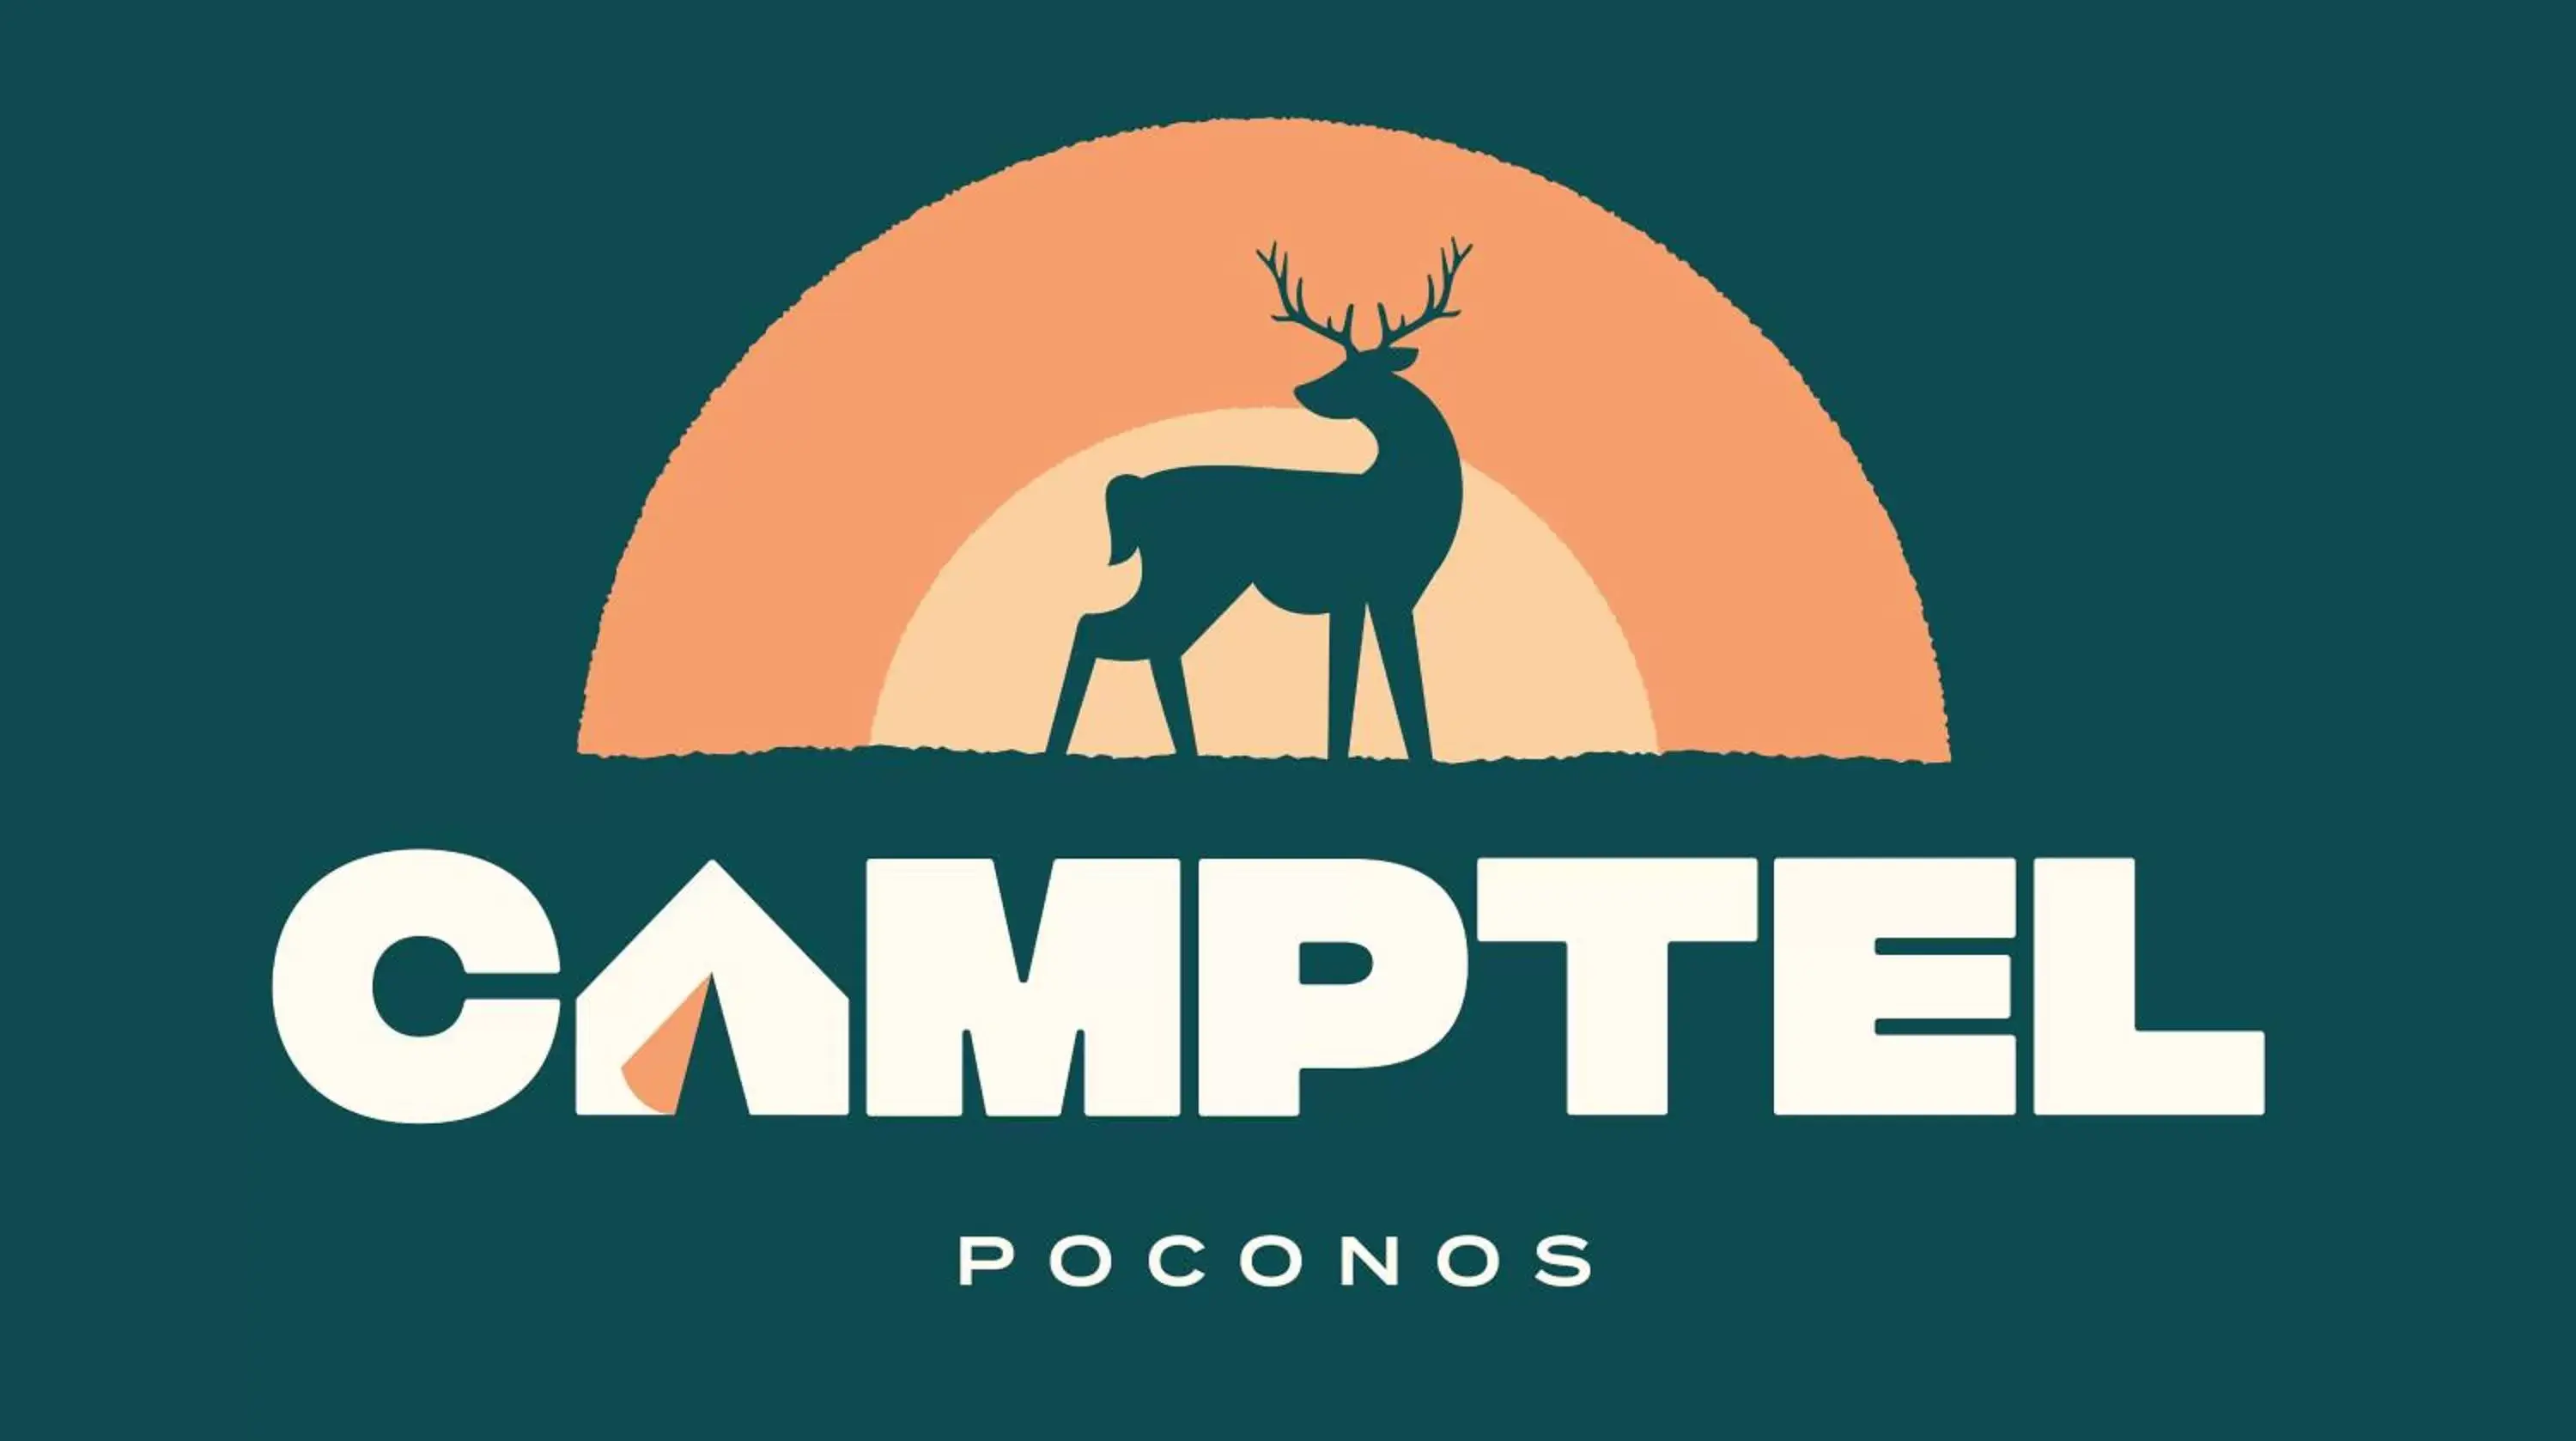 Property logo or sign in Camptel Poconos Lodging